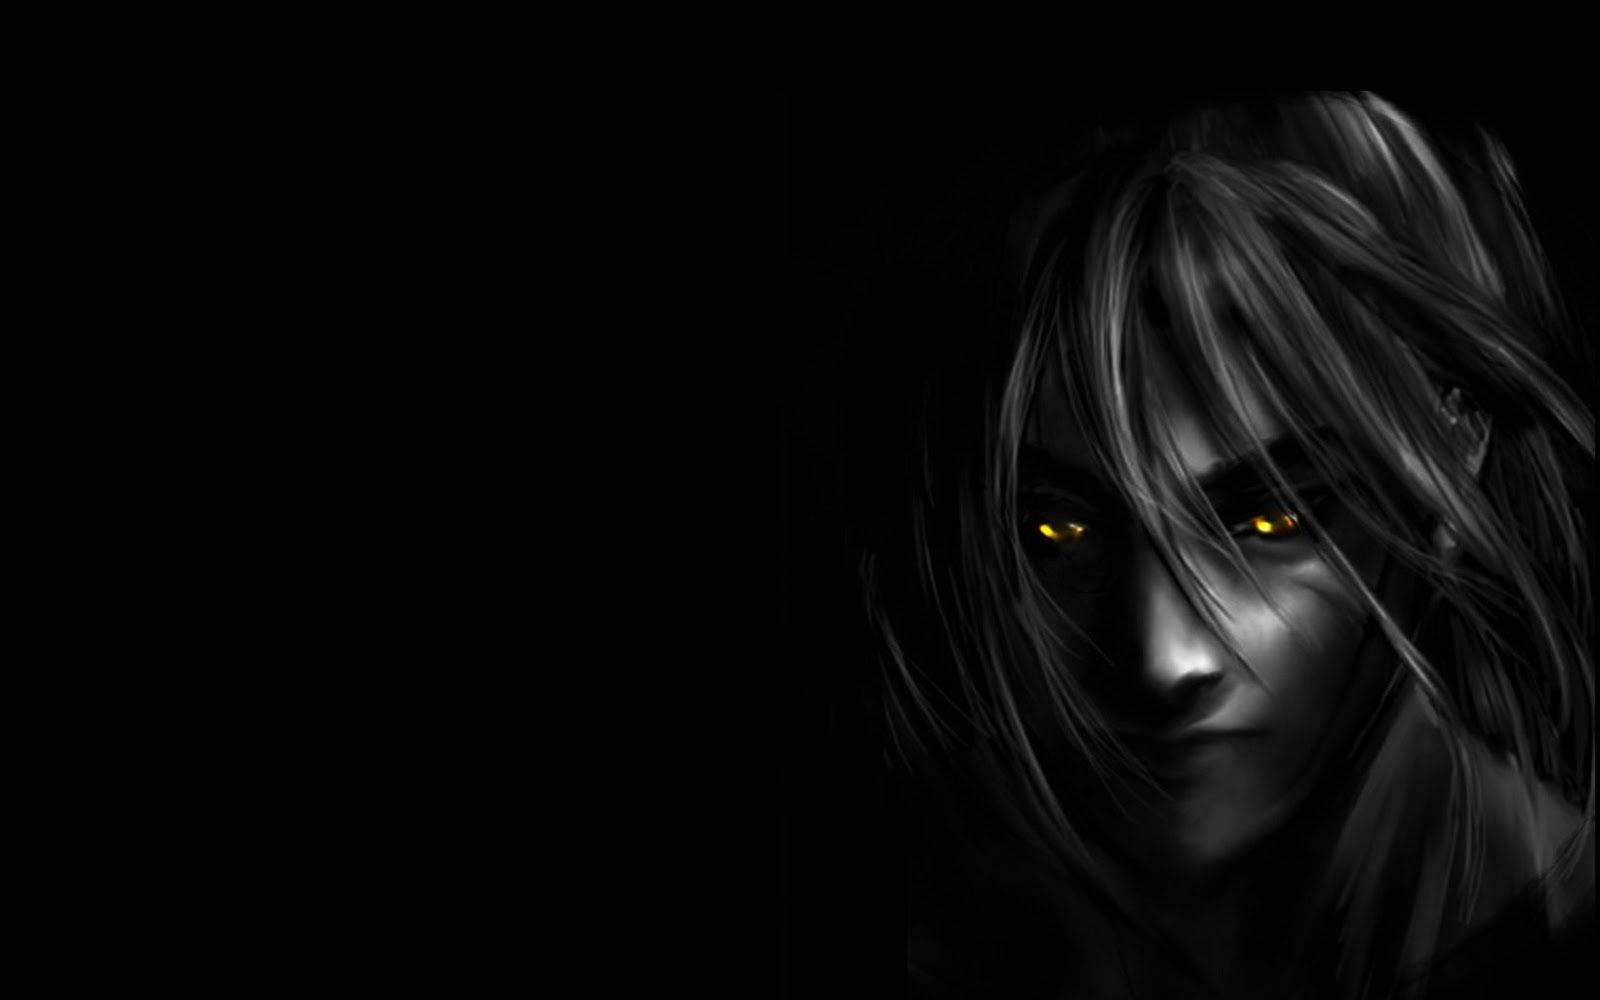 Dark Anime Man With Yellow Eyes